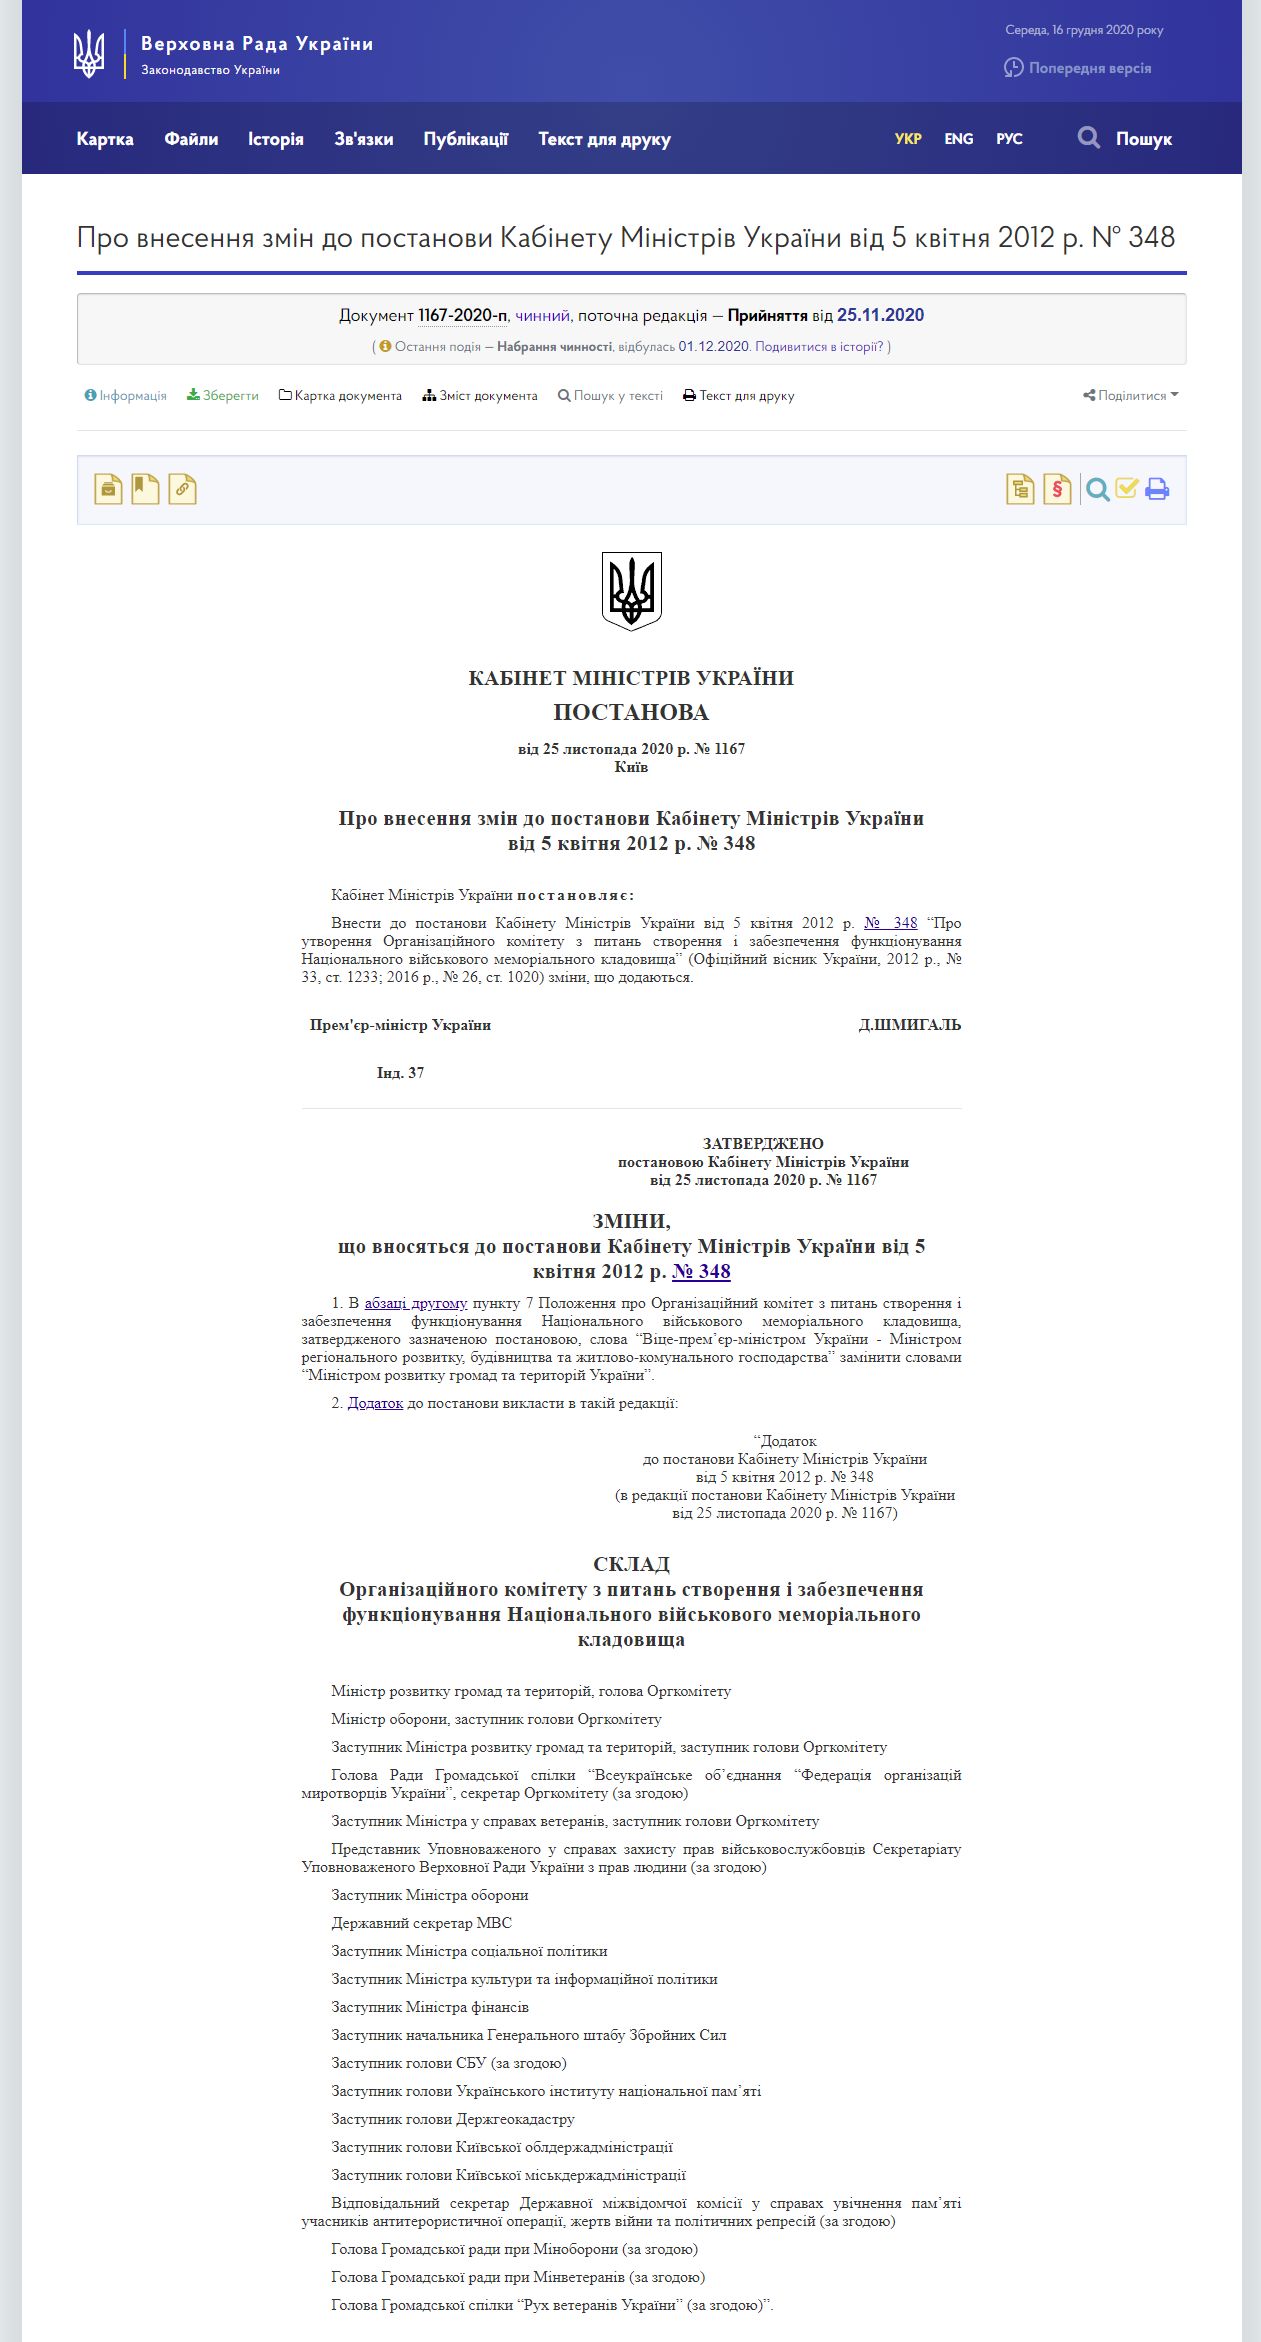 https://zakon.rada.gov.ua/laws/show/1167-2020-%D0%BF#Text